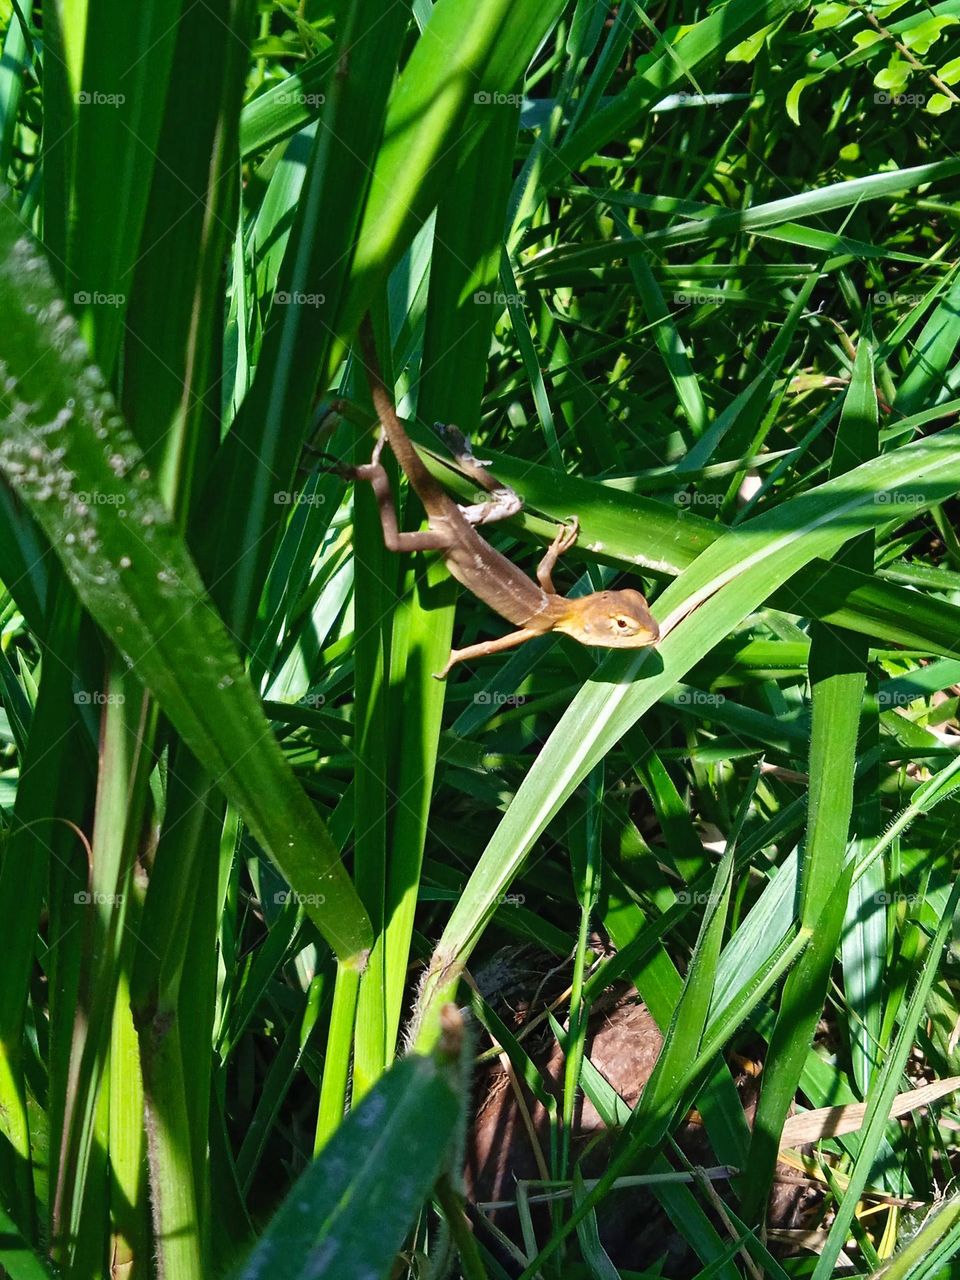 A lizard hanging on the grass.